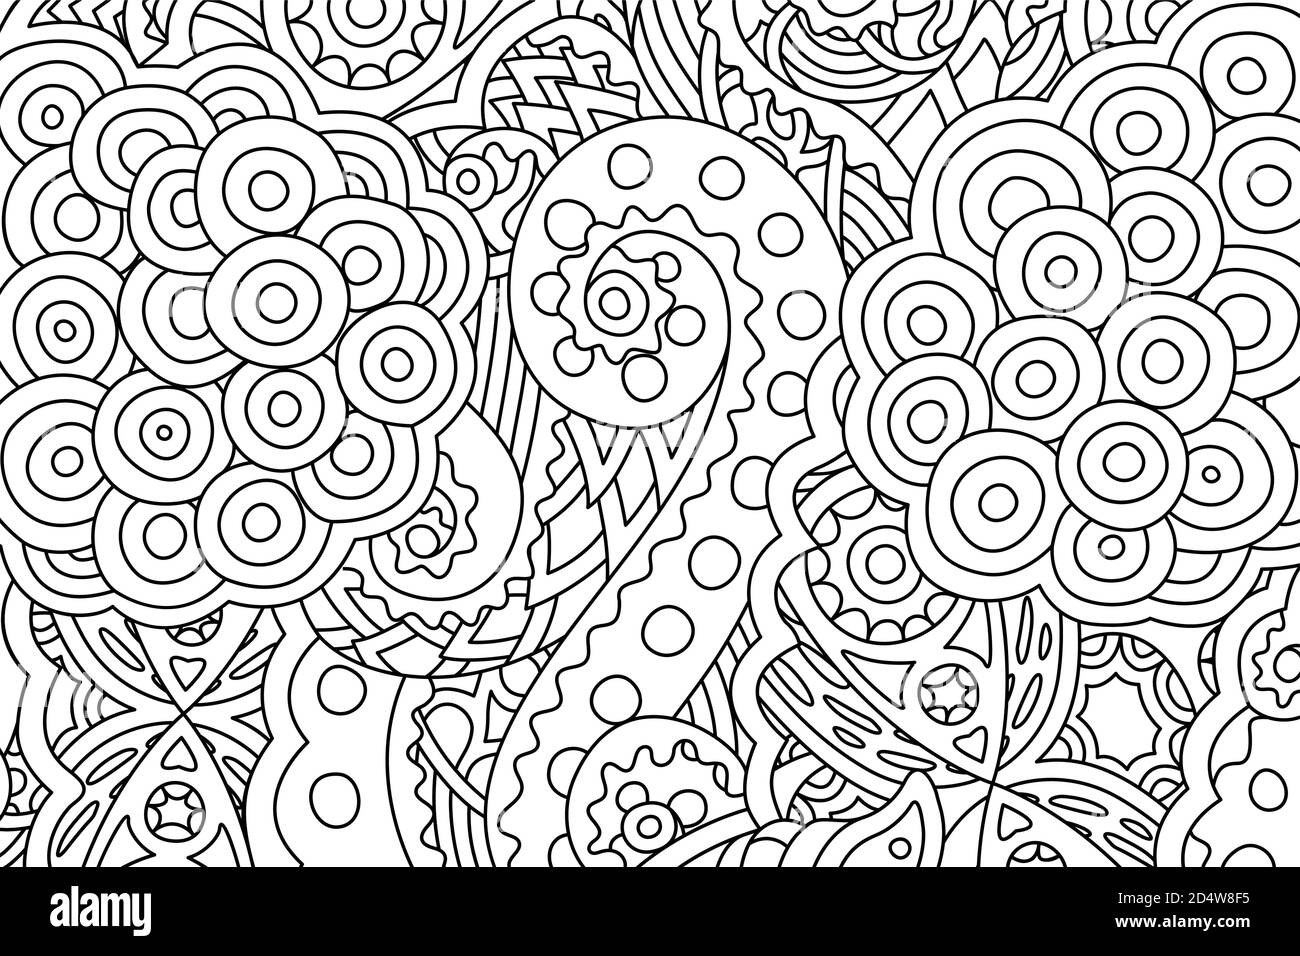 Schöne Zen-Kunstseite mit abstraktem linearem Muster Stock Vektor